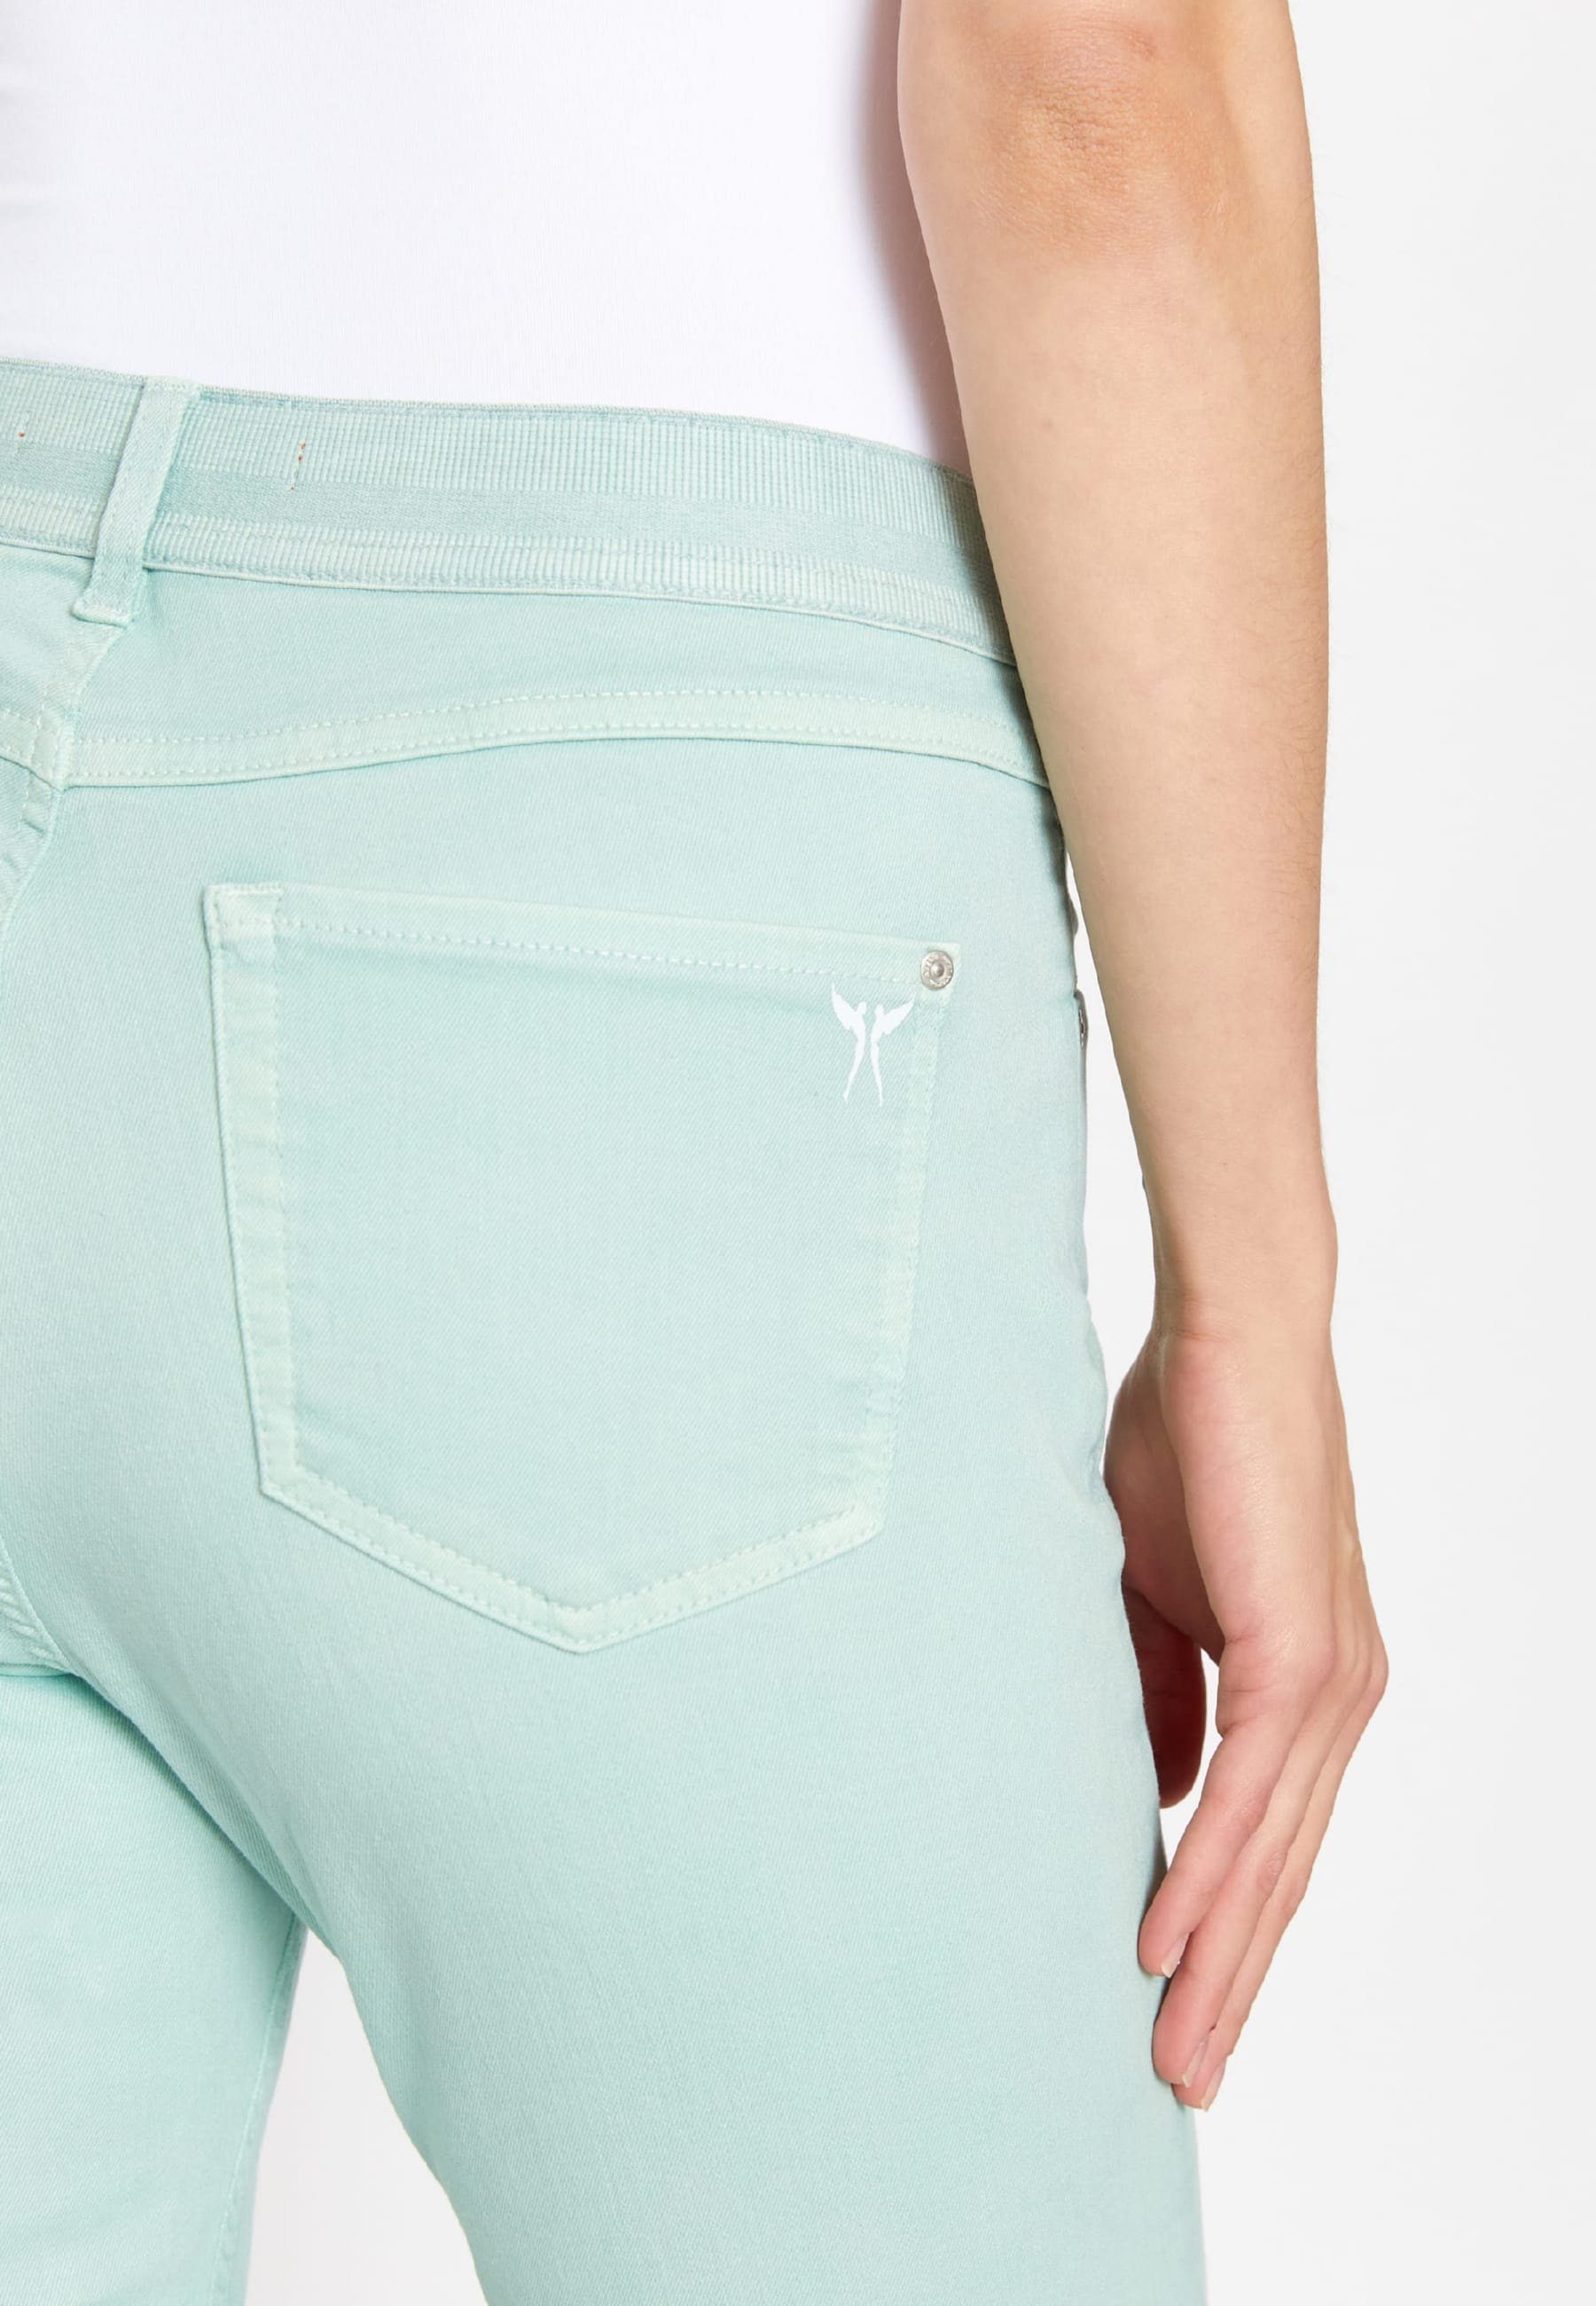 ANGELS Jeans mit Label-Applikationen Coloured Crop Denim Slim-fit-Jeans OSFA mint mit